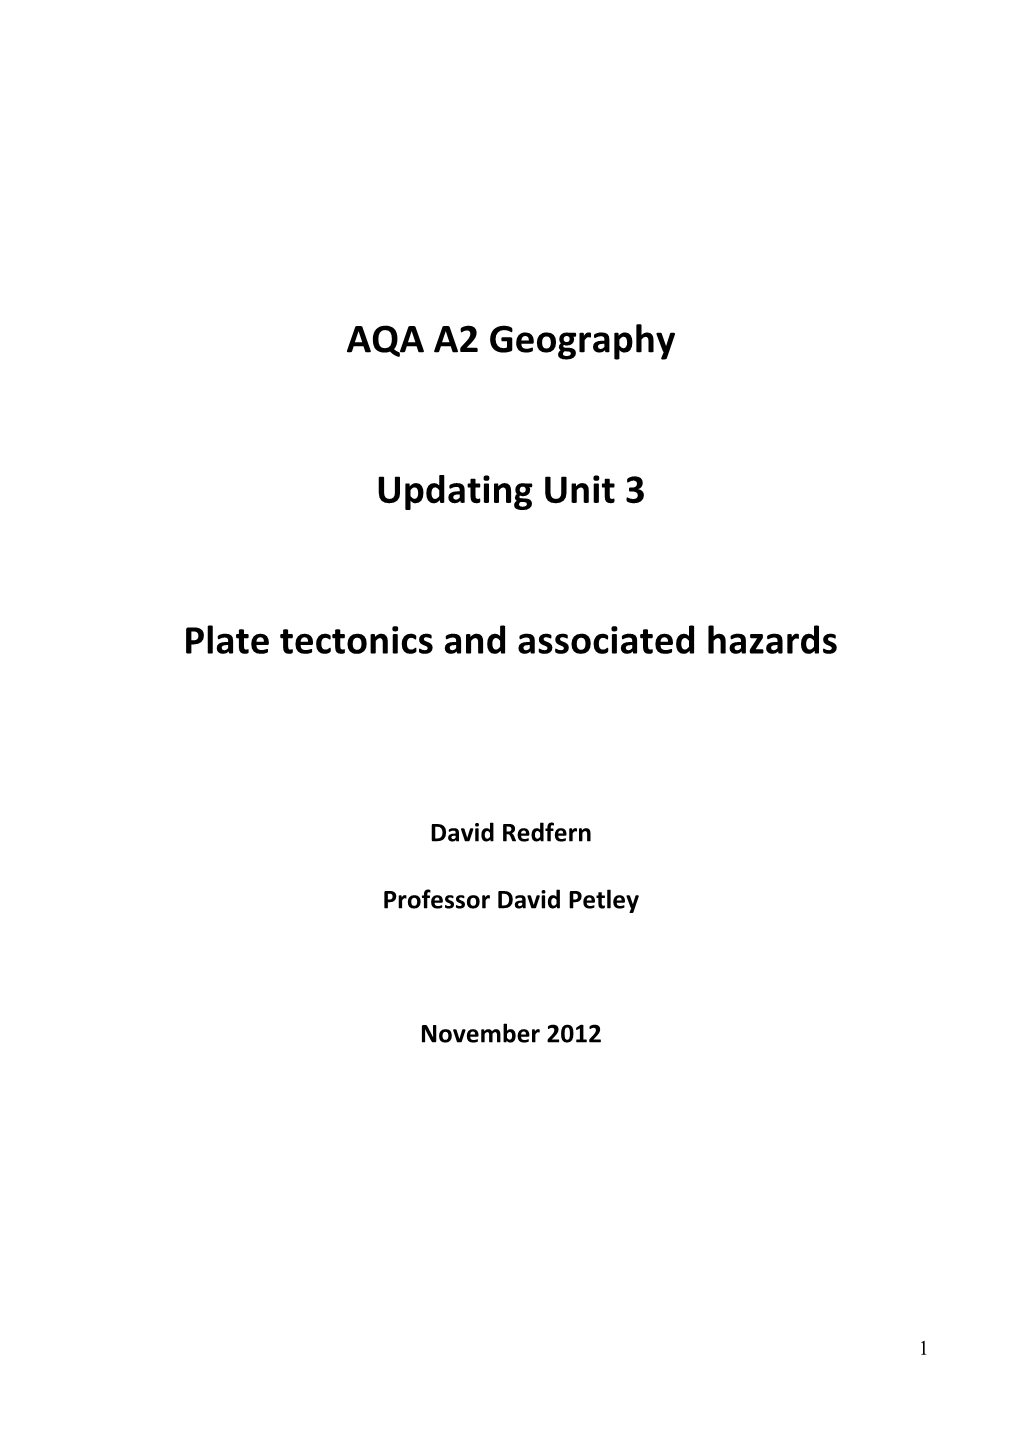 Plate Tectonics and Associated Hazards